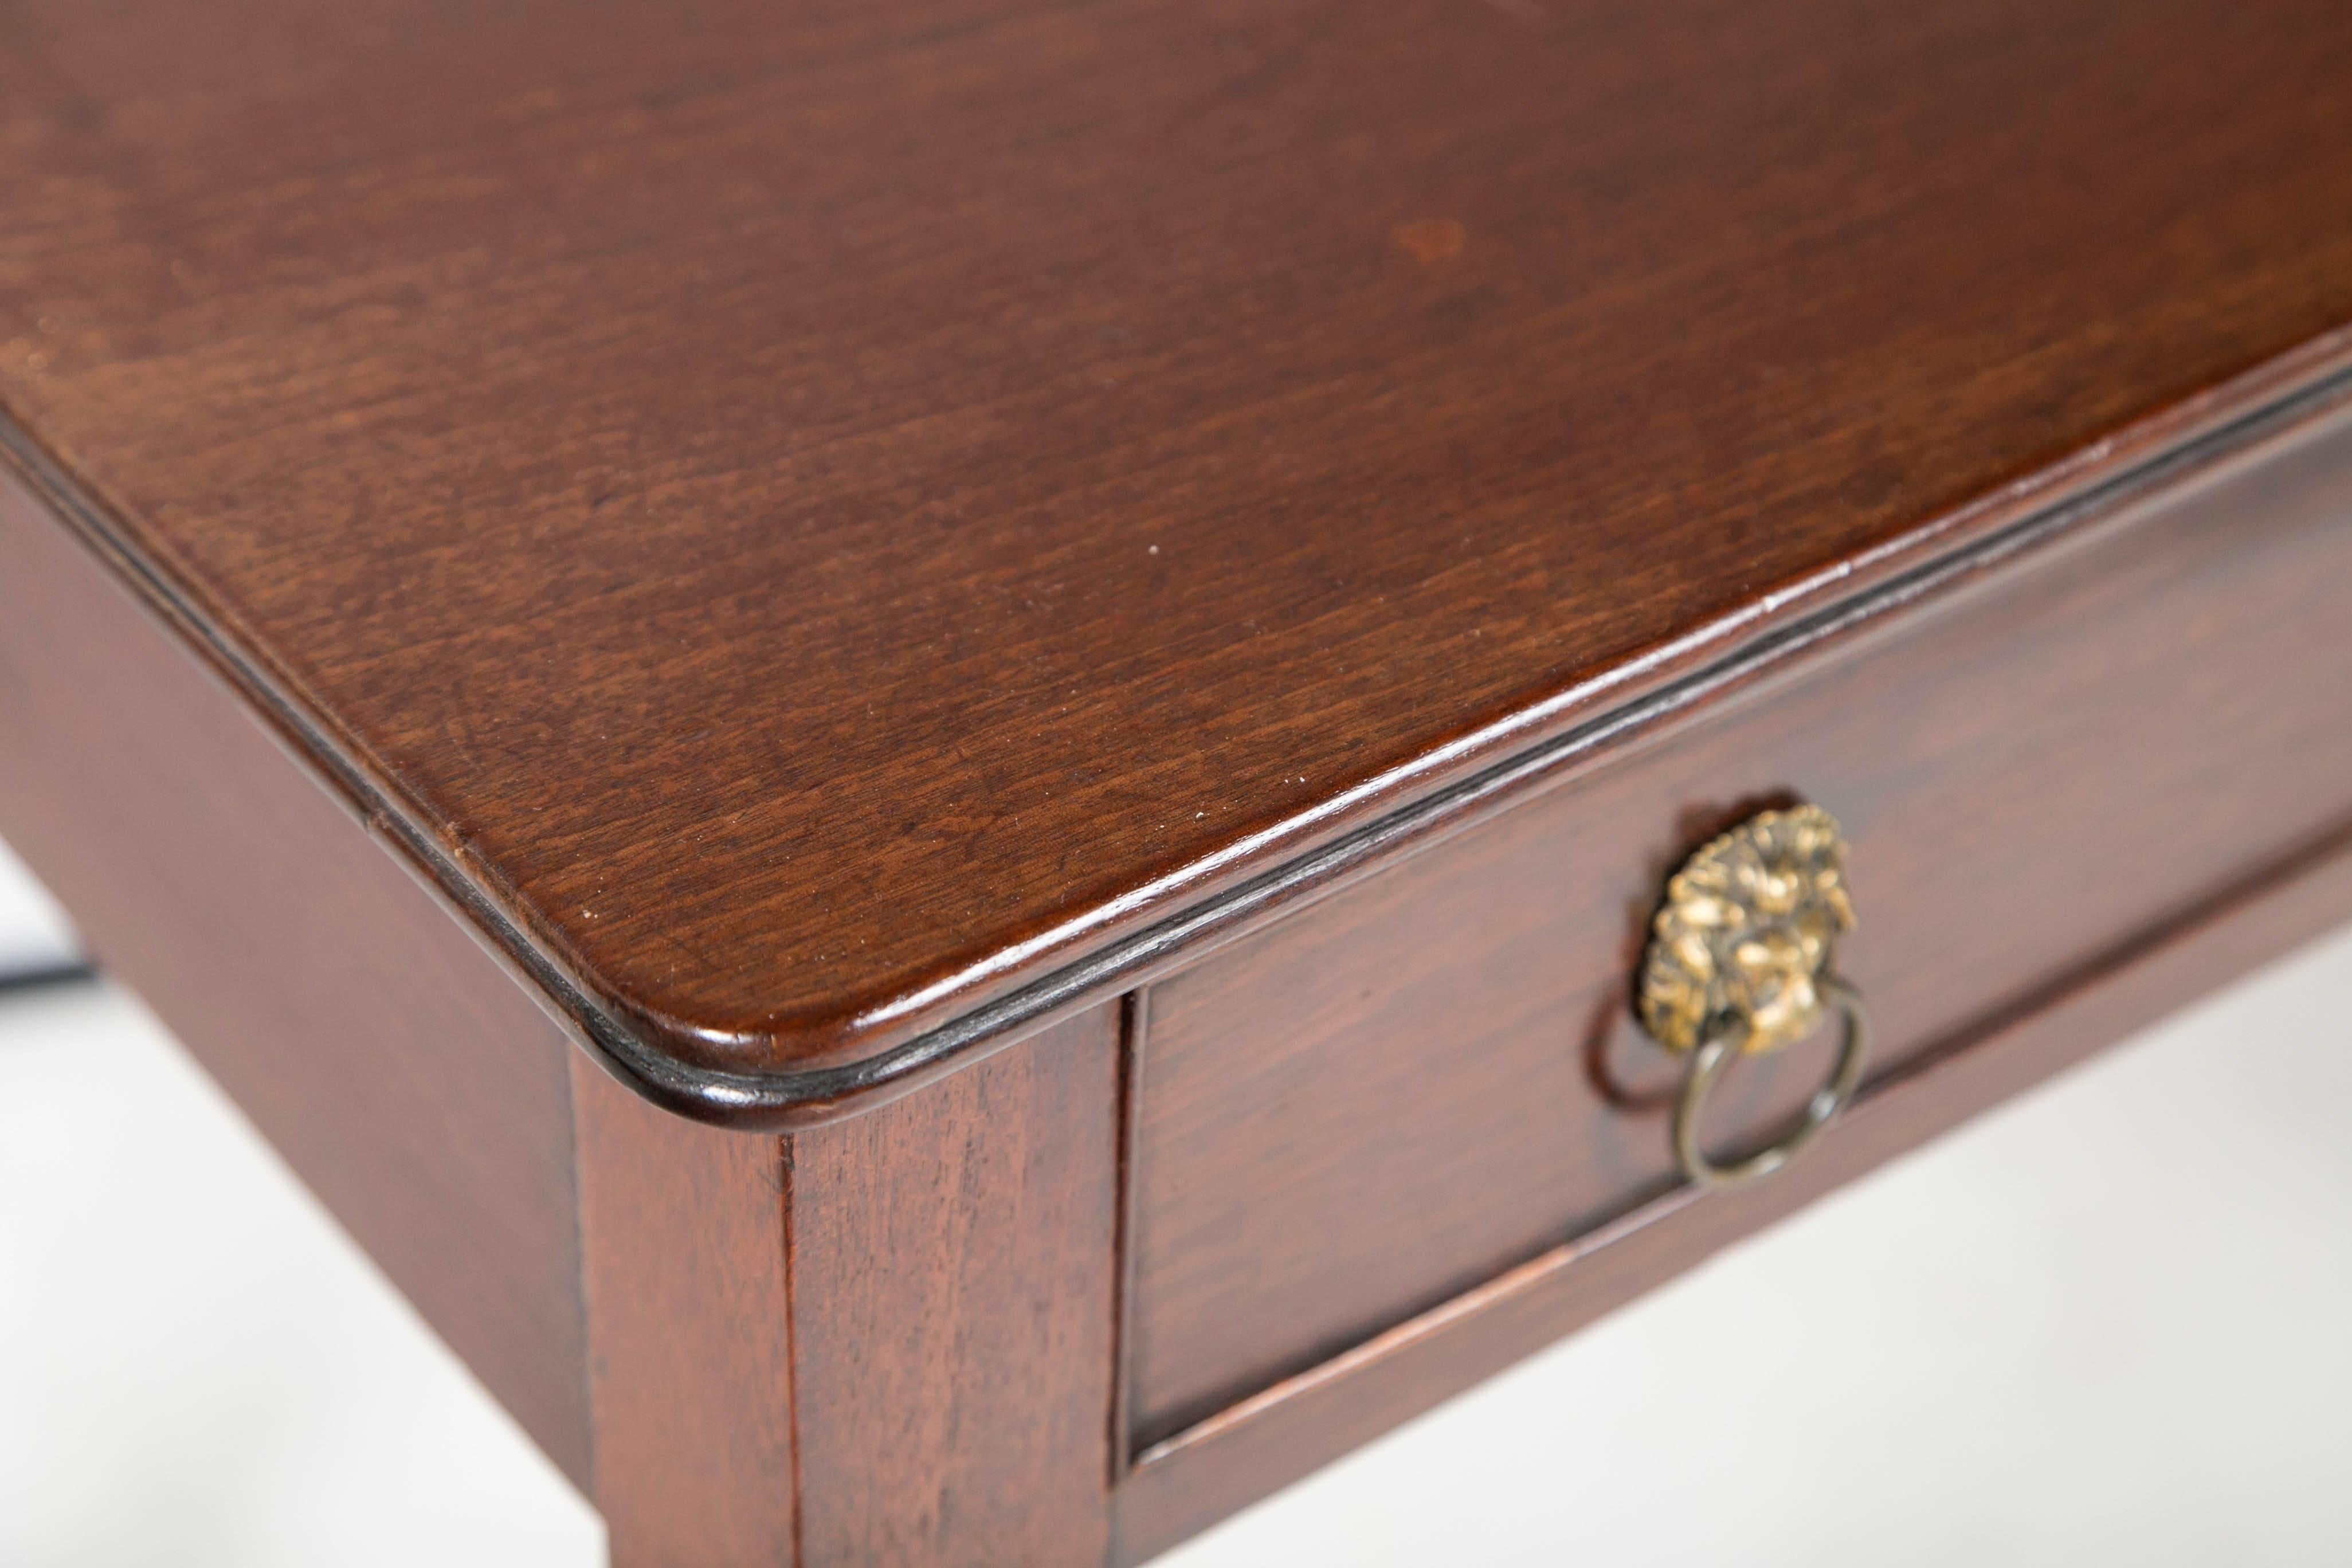 English late 19th century mahogany writing table with elegantly turned legs and novel brasses.